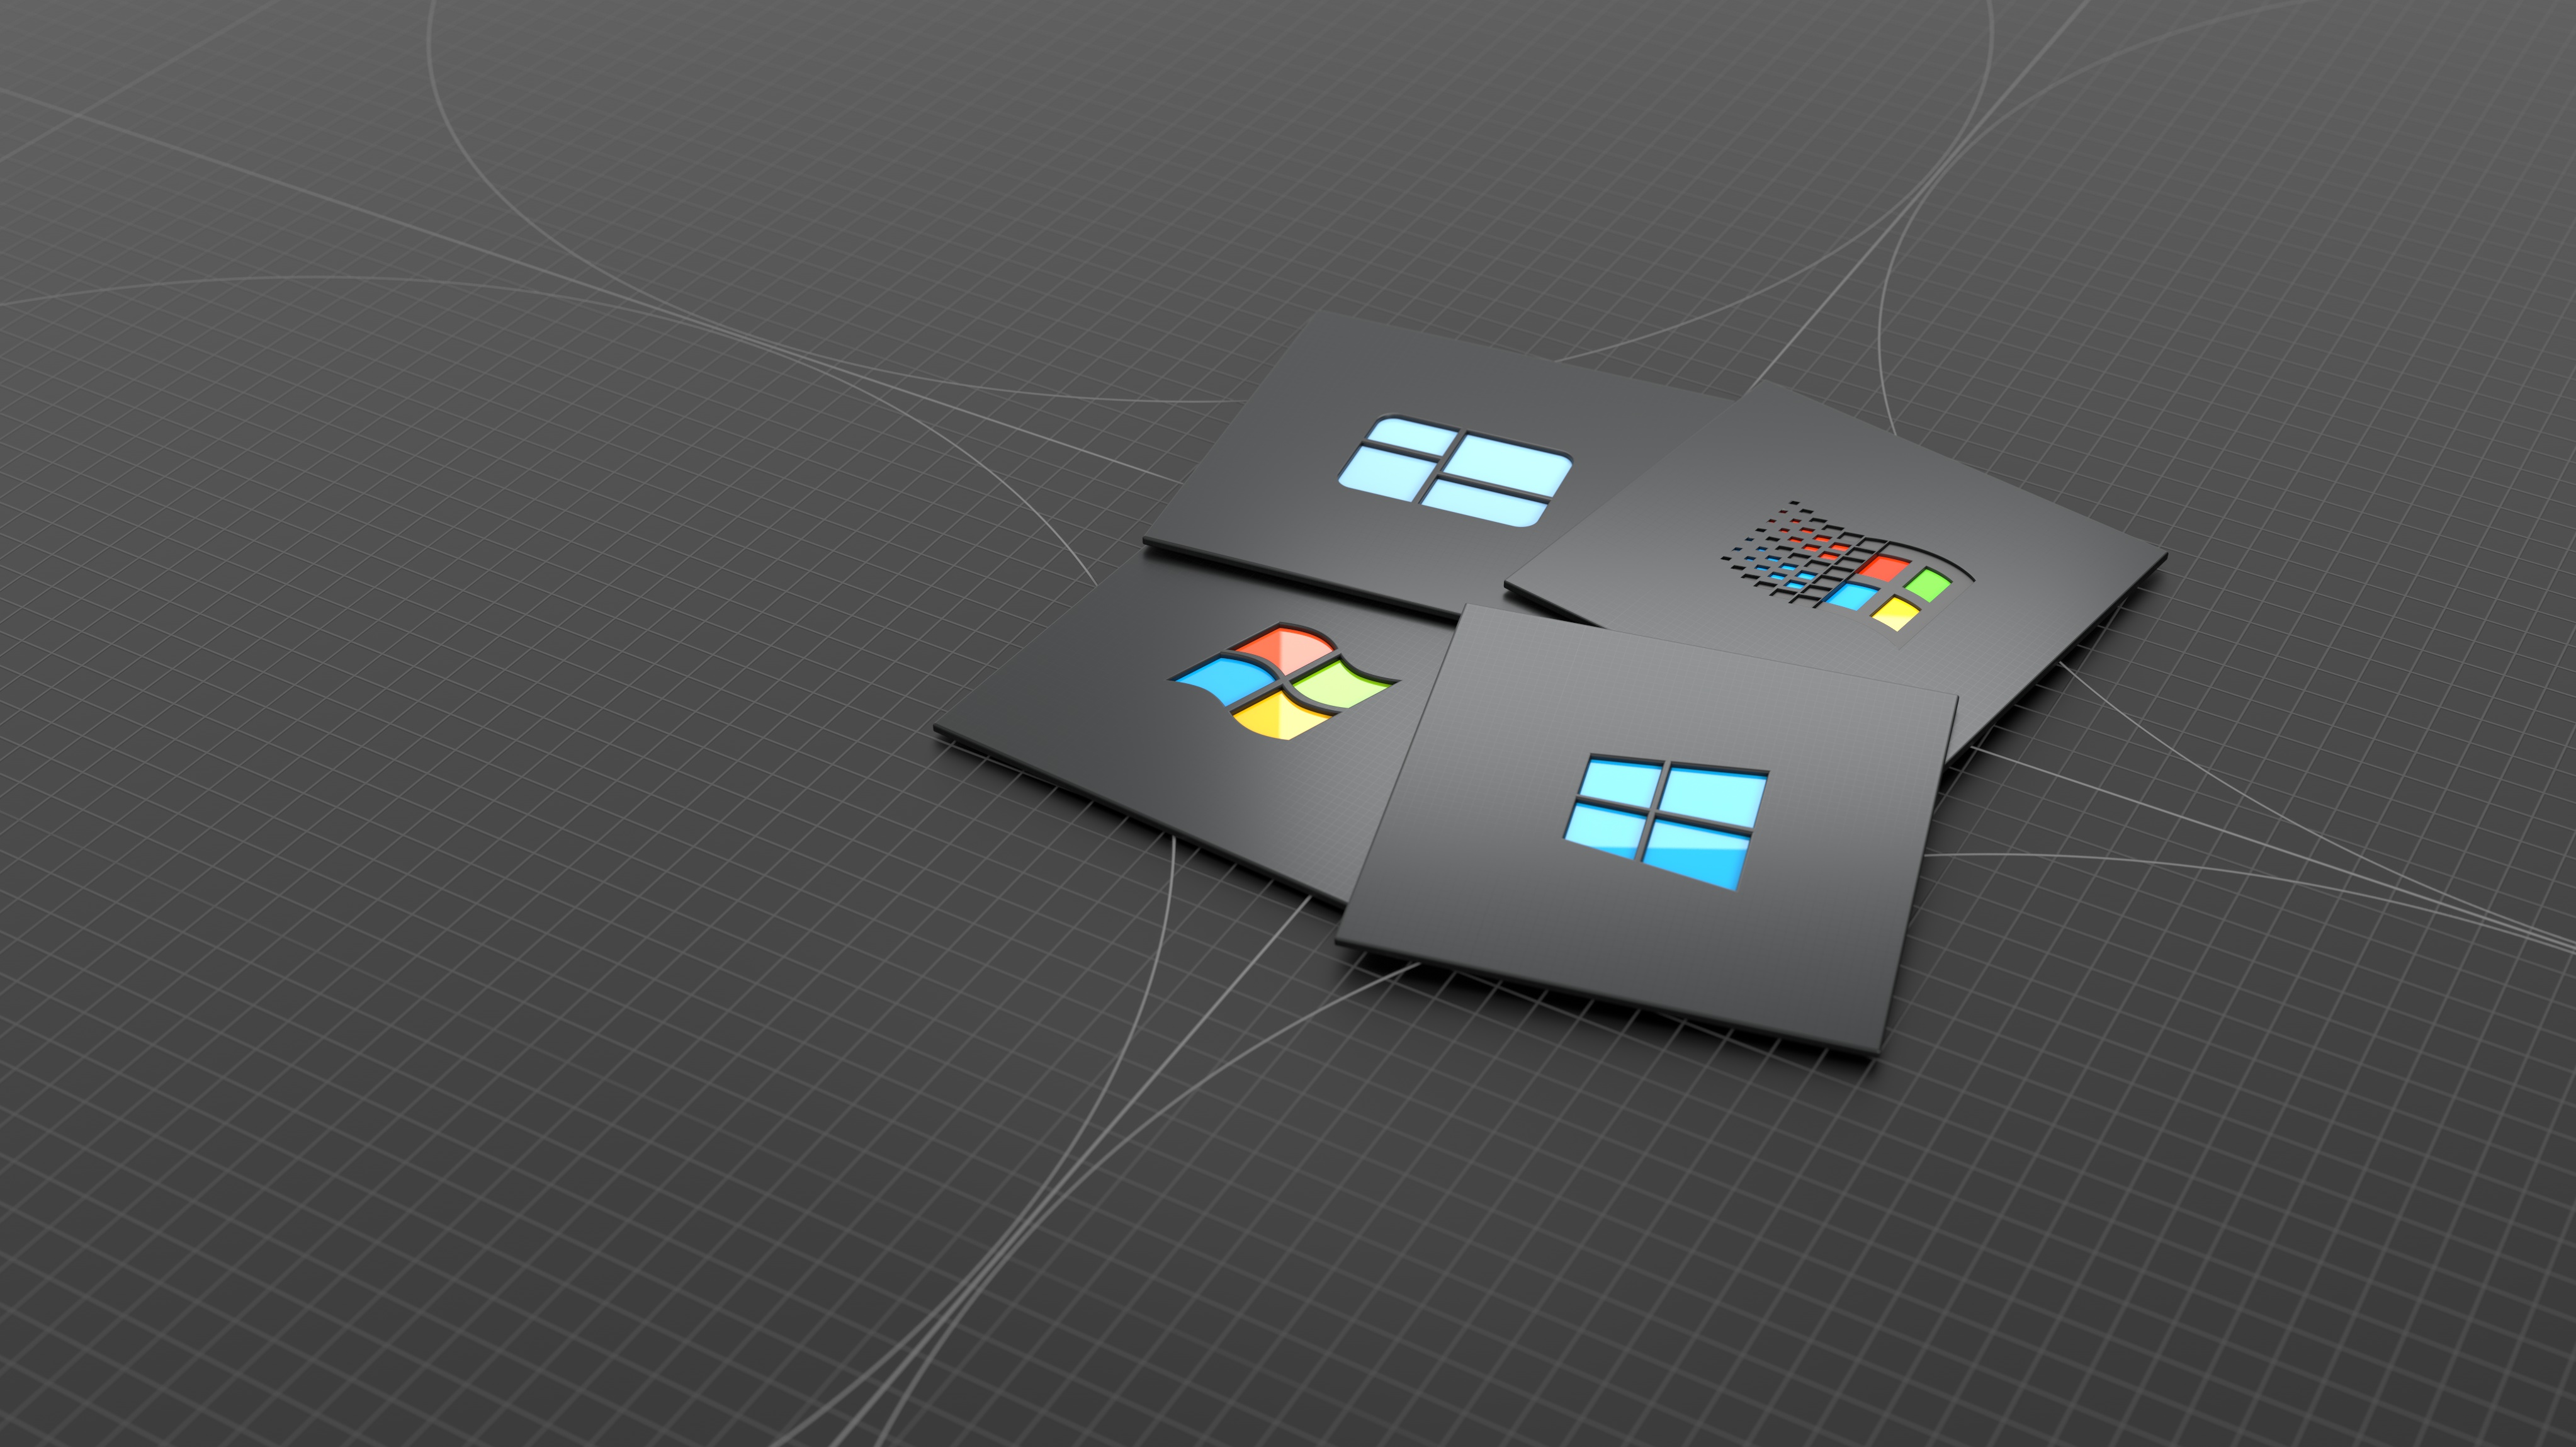 General 4092x2298 Windows 10 windows logo Windows 7 Microsoft Windows 95 Microsoft Windows operating system